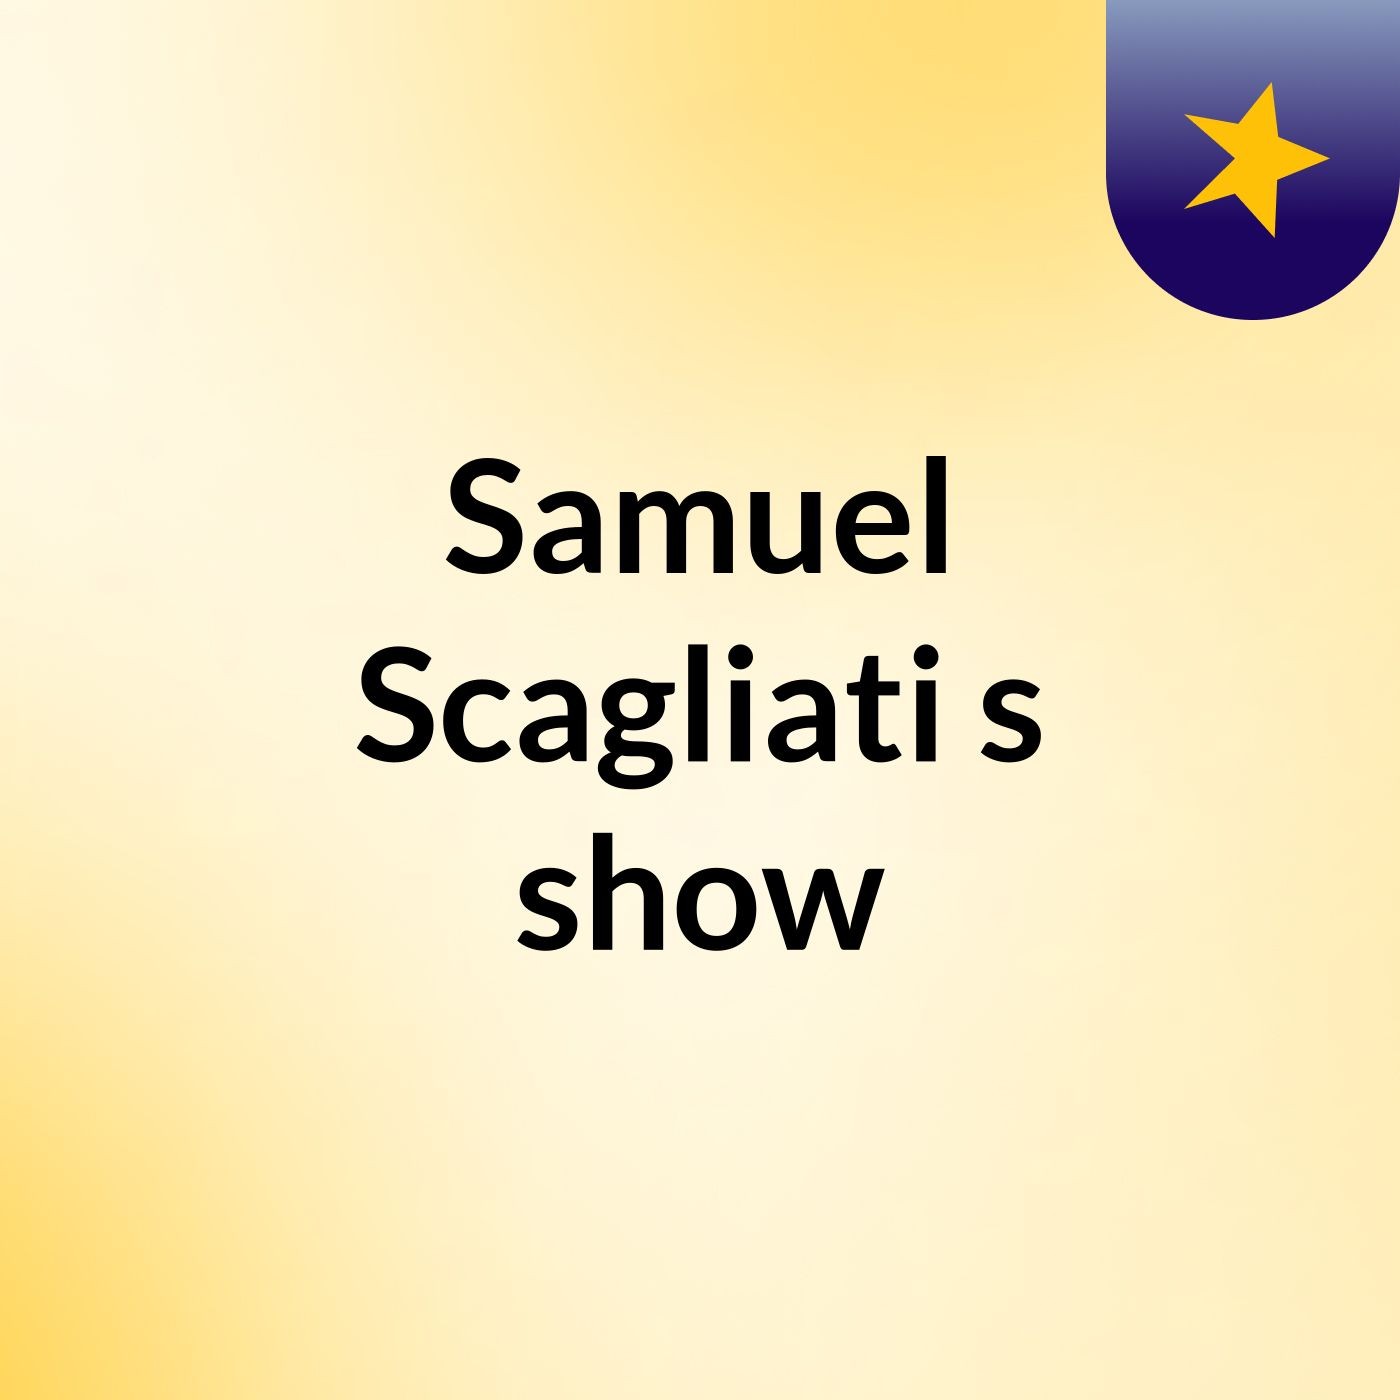 Samuel Scagliati's show